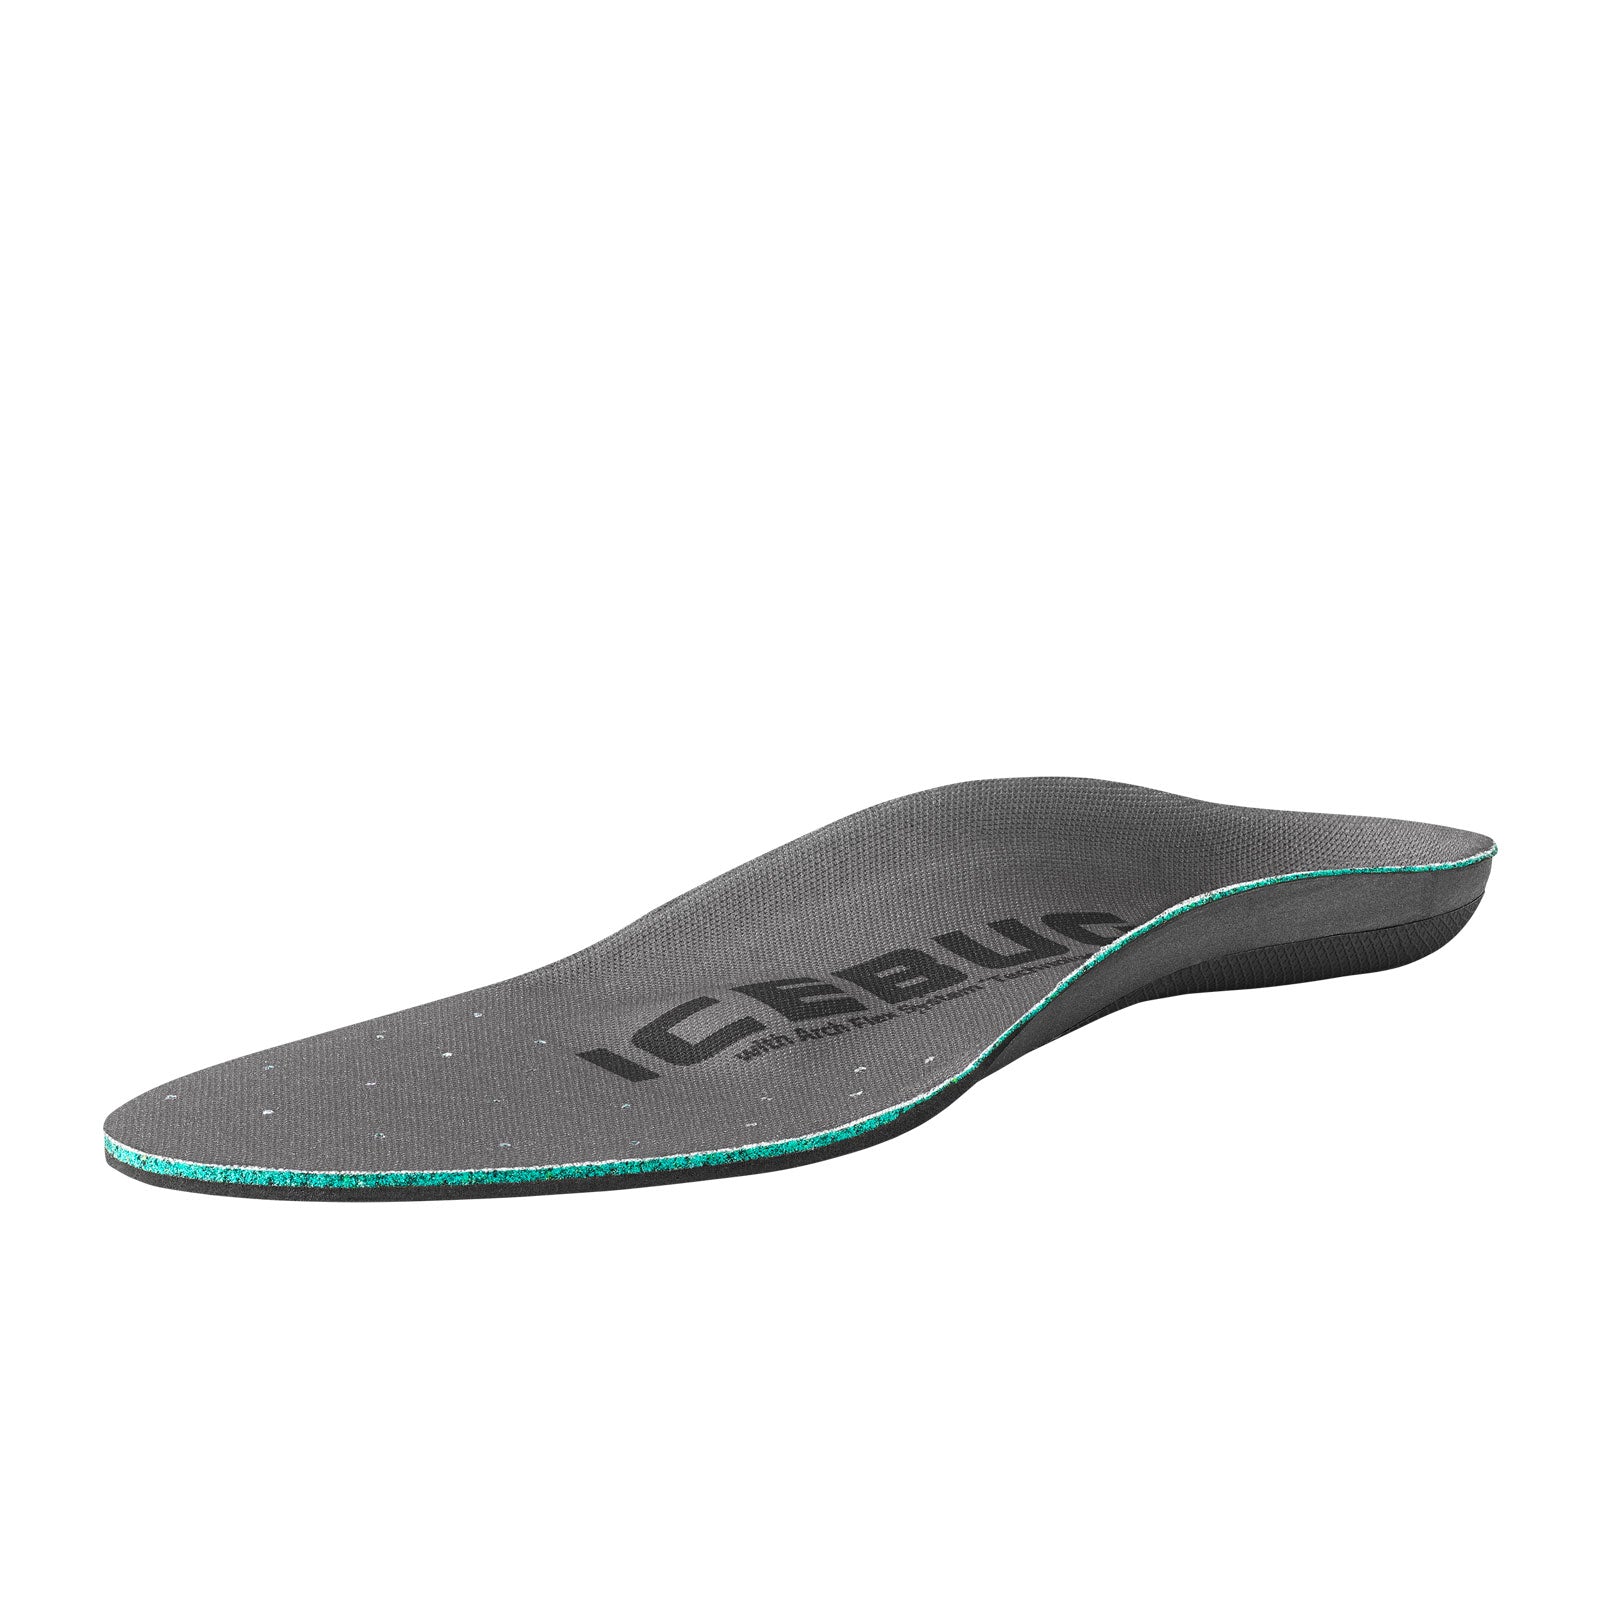 Icebug Comfort Medium Insole (Unisex) - Charcoal Orthotics - Full Length - The Heel Shoe Fitters